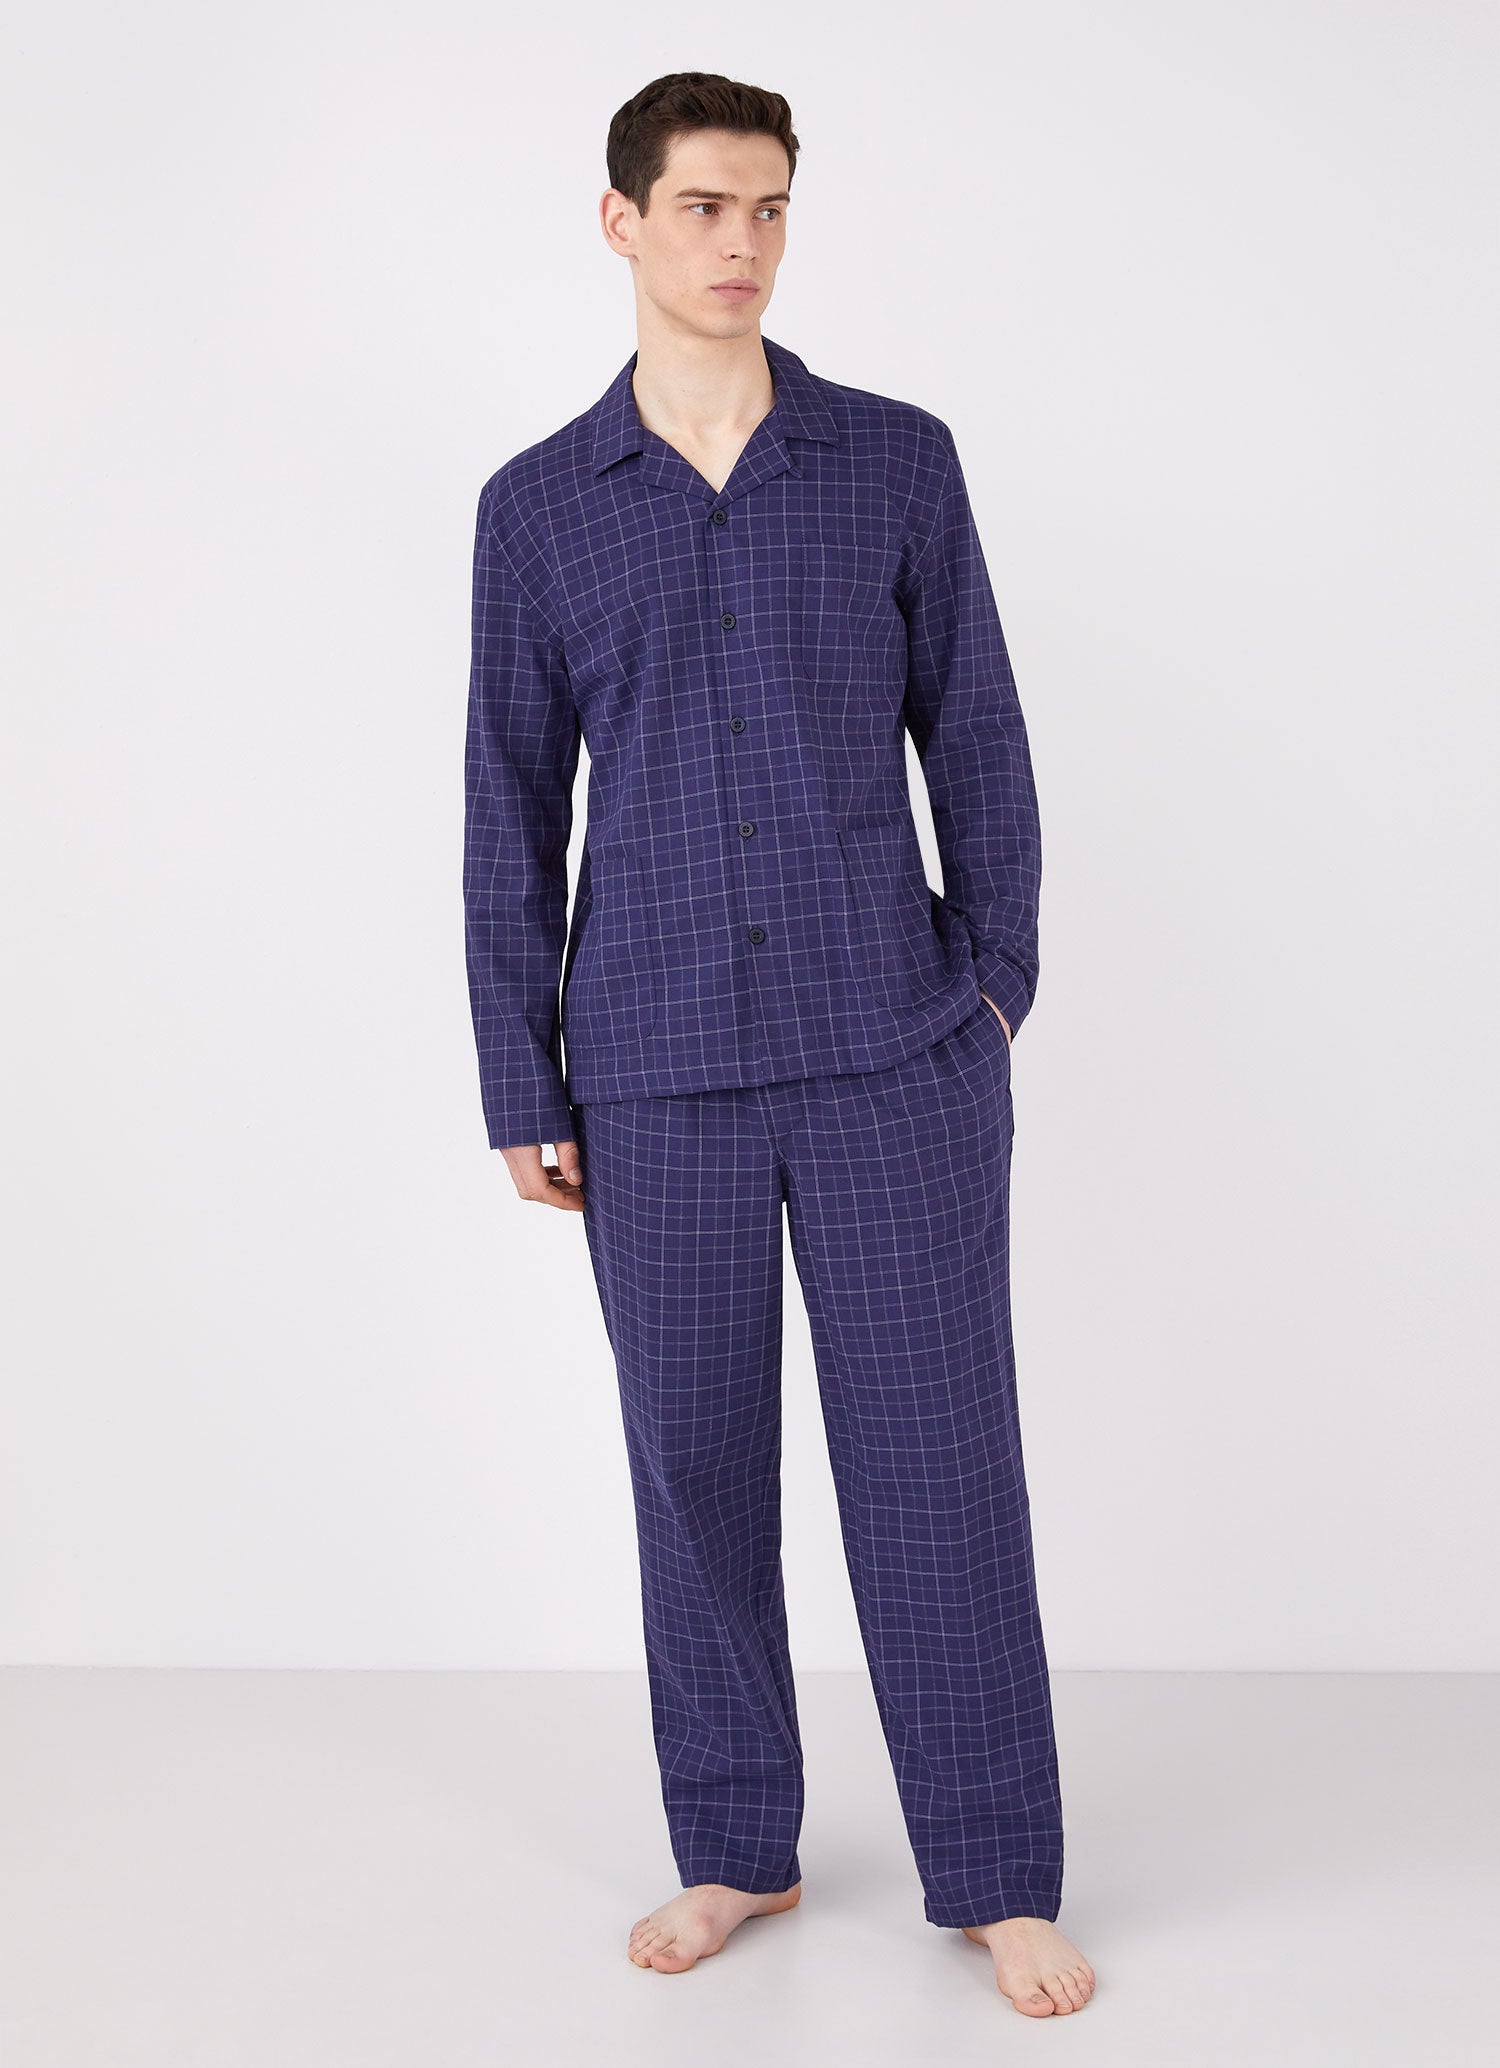 Men's Cotton Flannel Pyjama Shirt in Navy Check